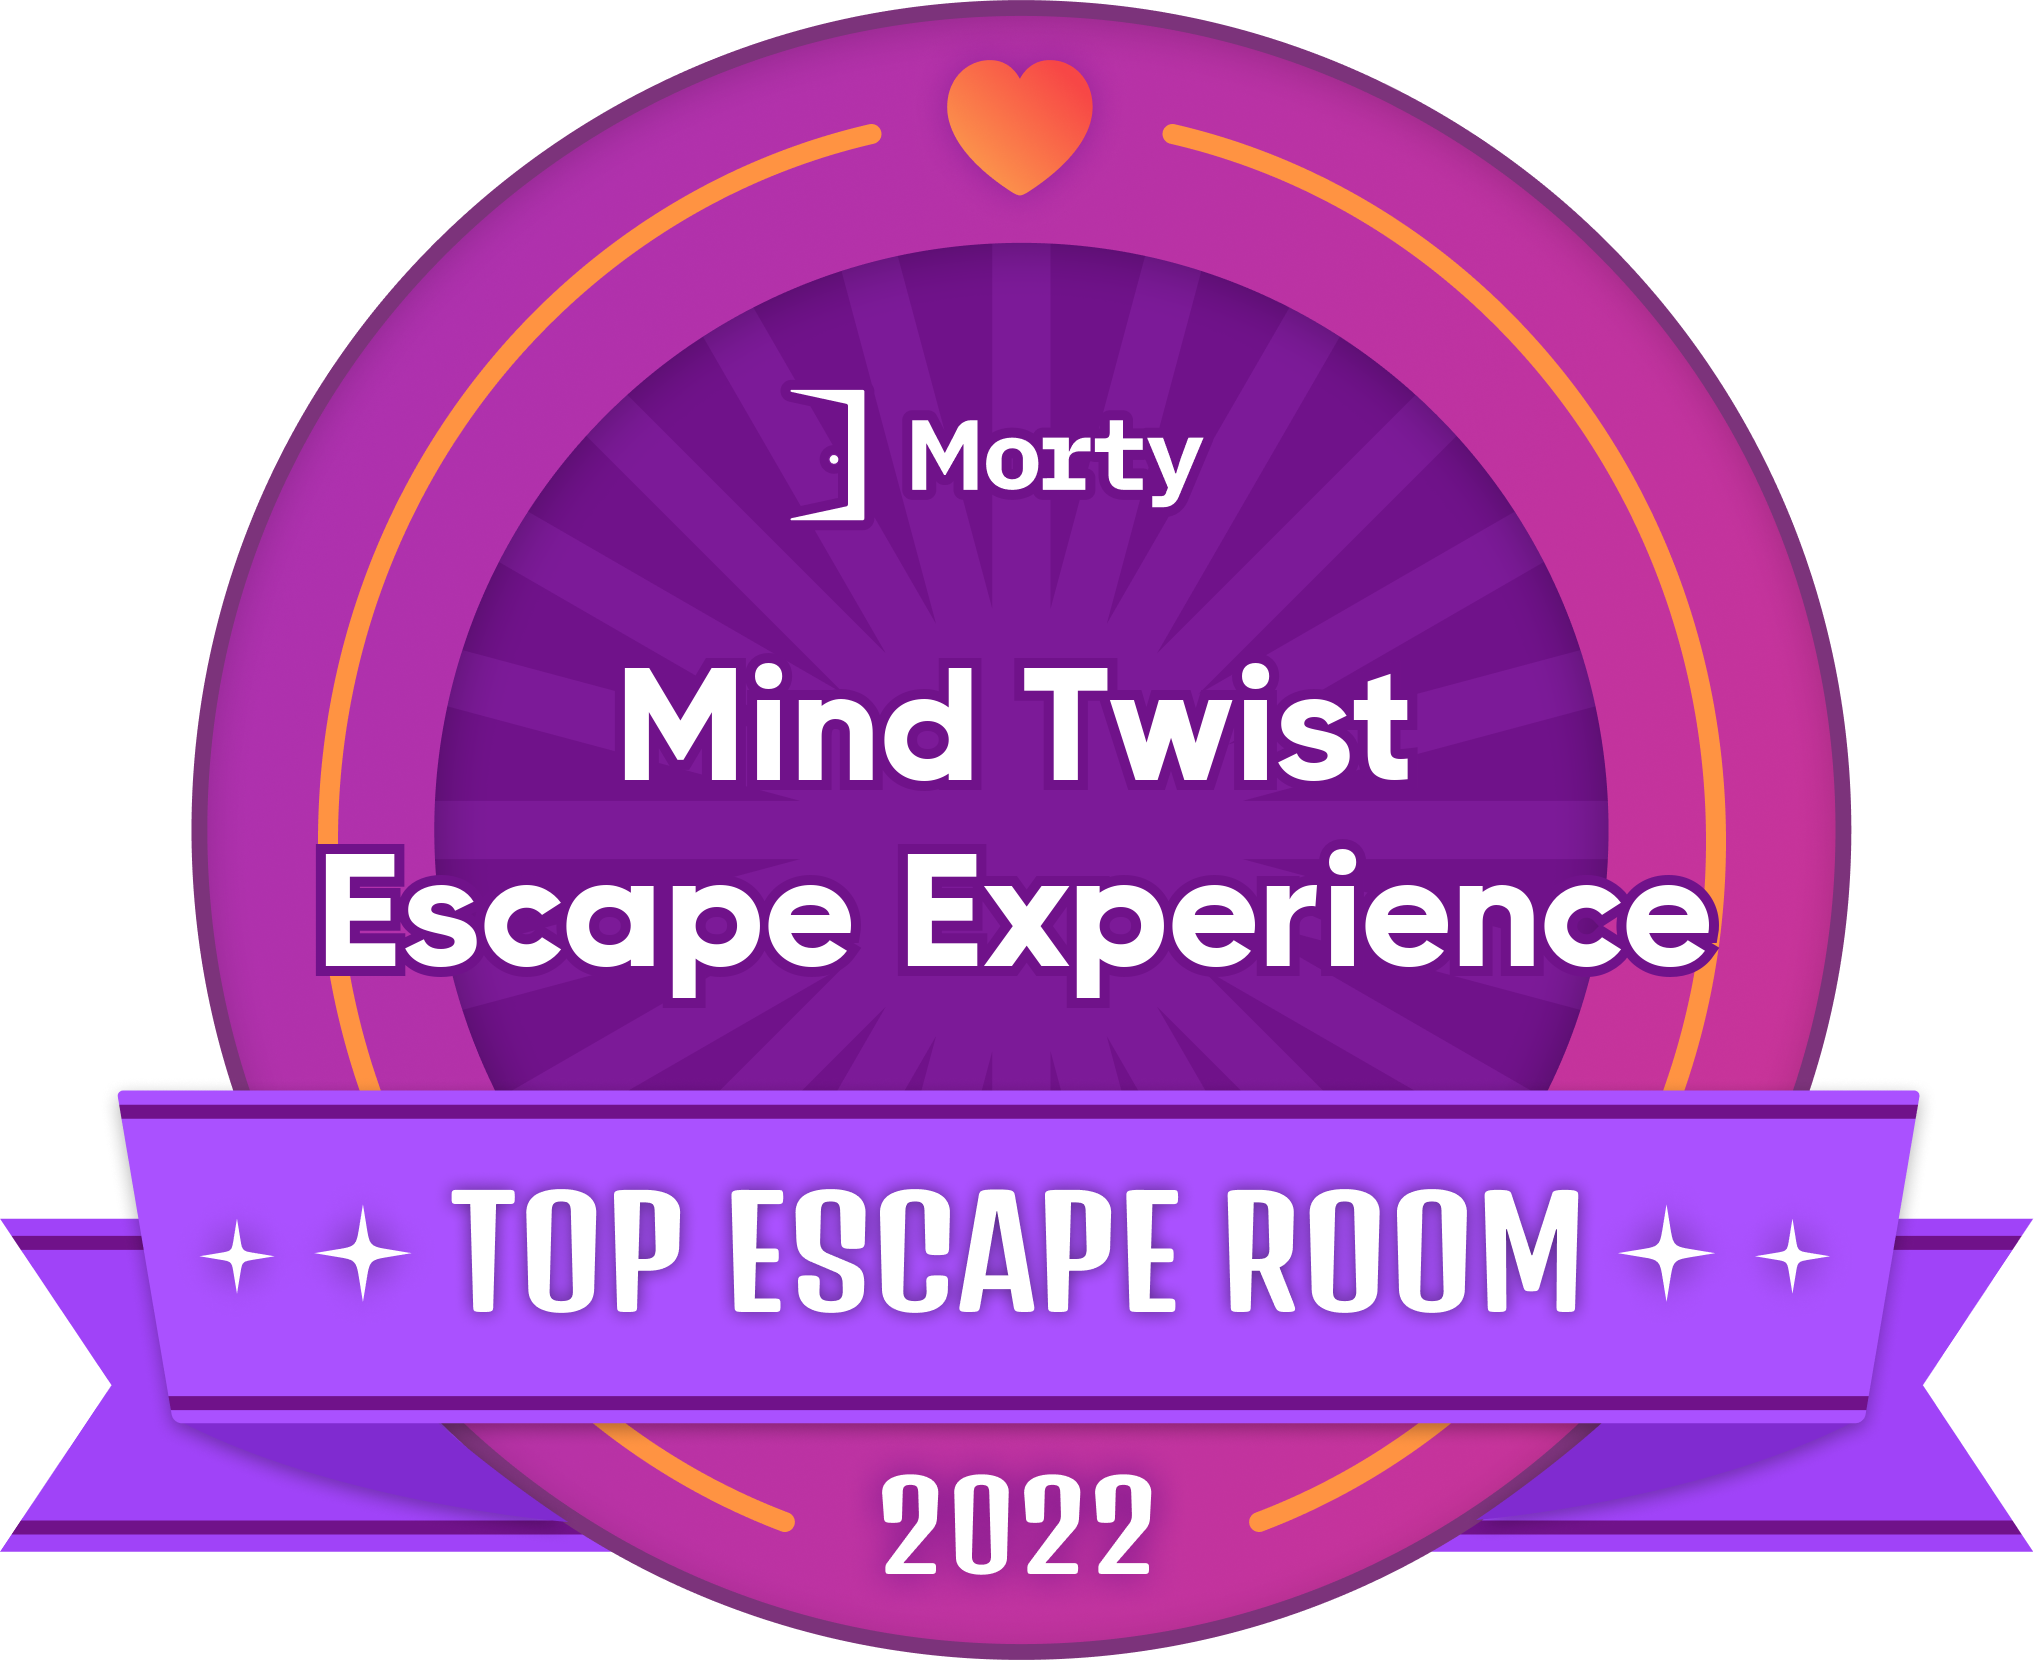 Top Escape Room in the world award, 2022